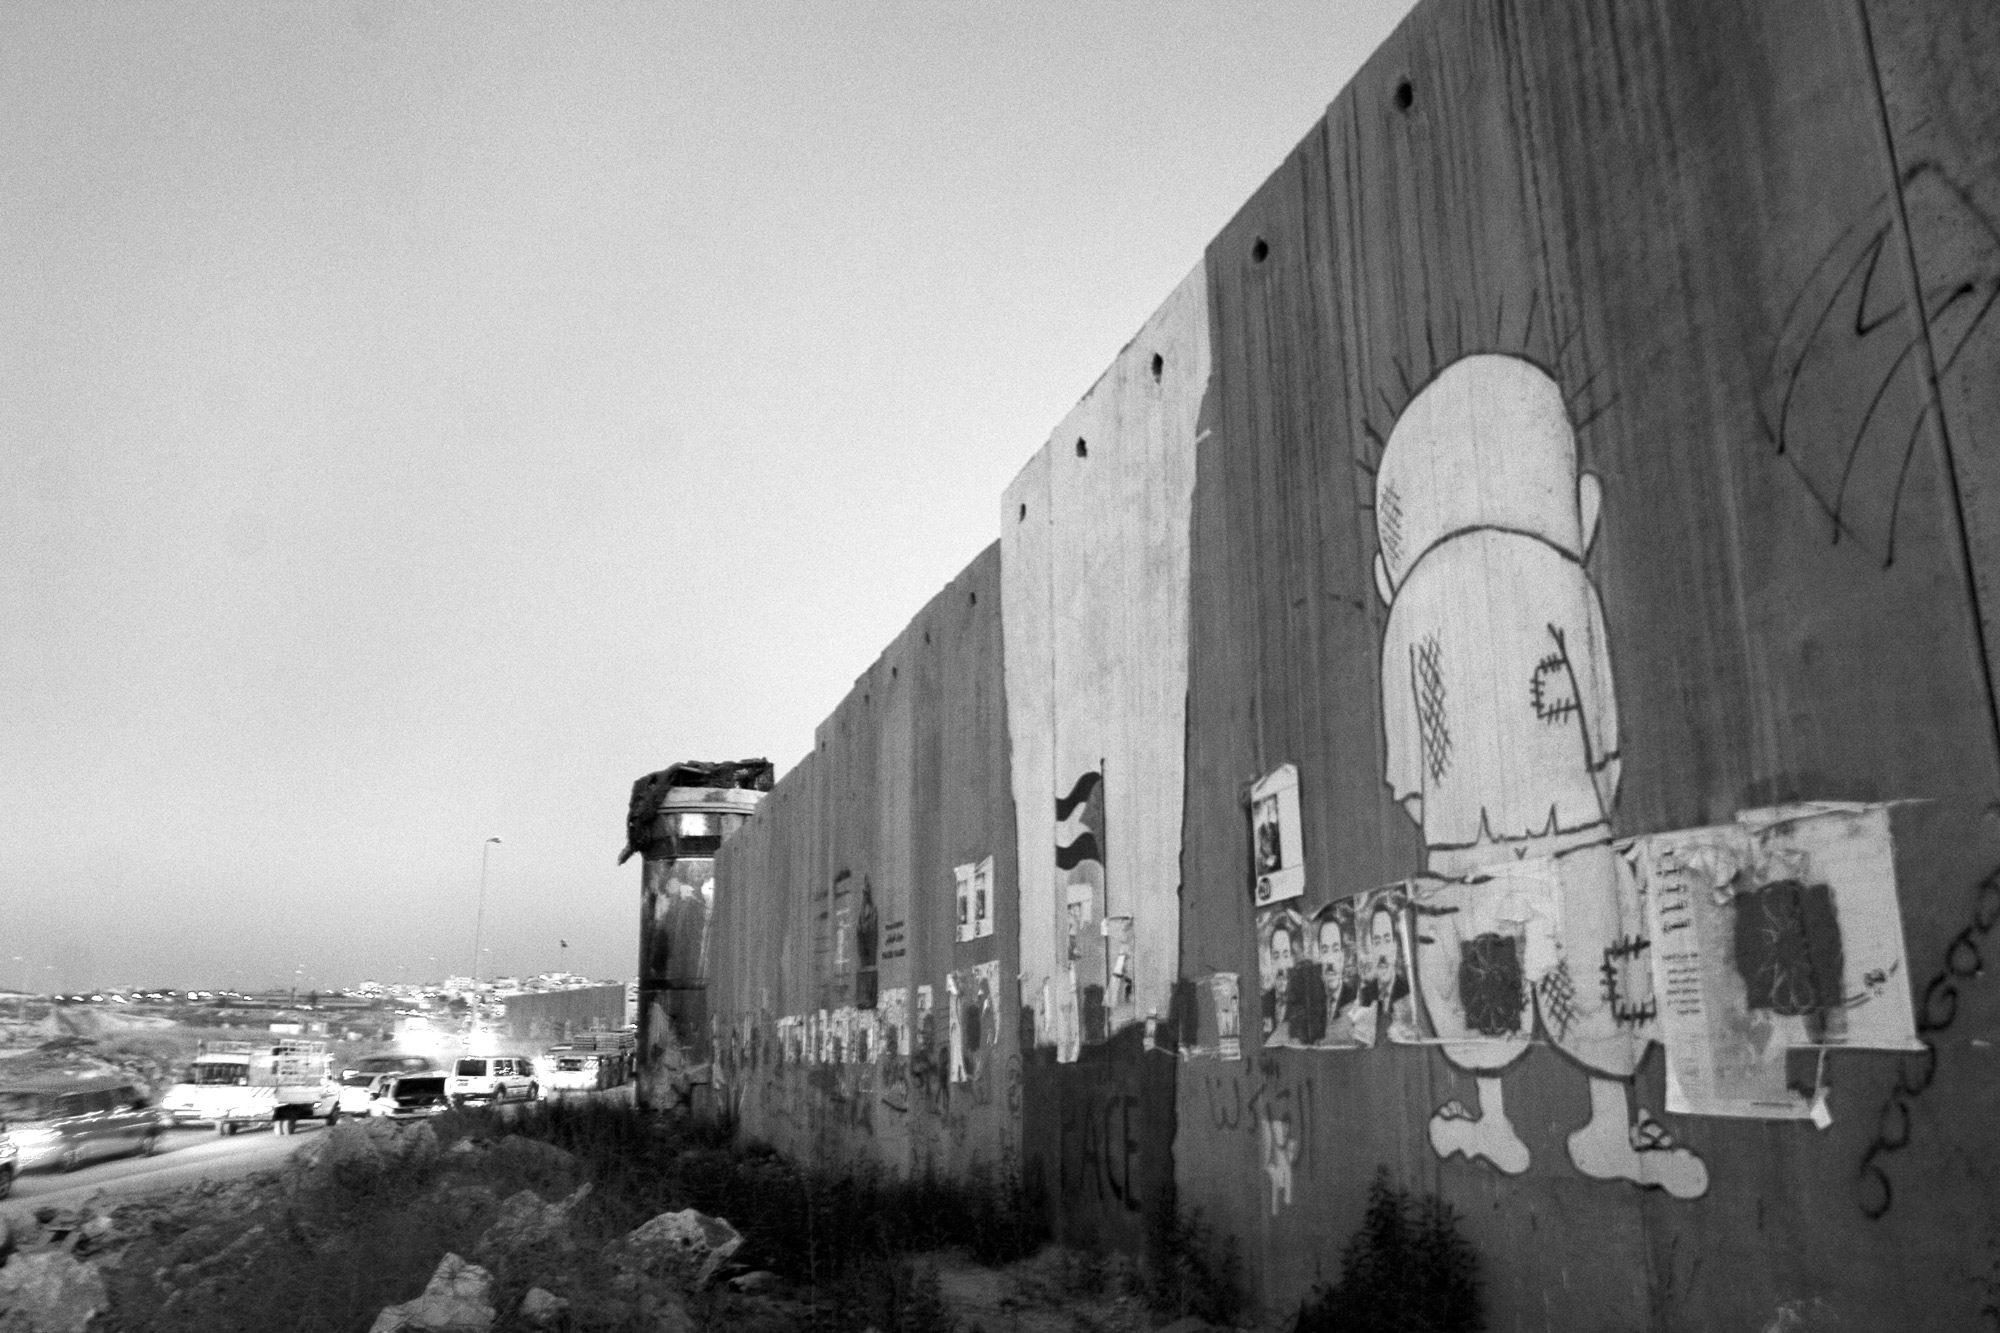 The wall separating Ramallah & Jerusalem.